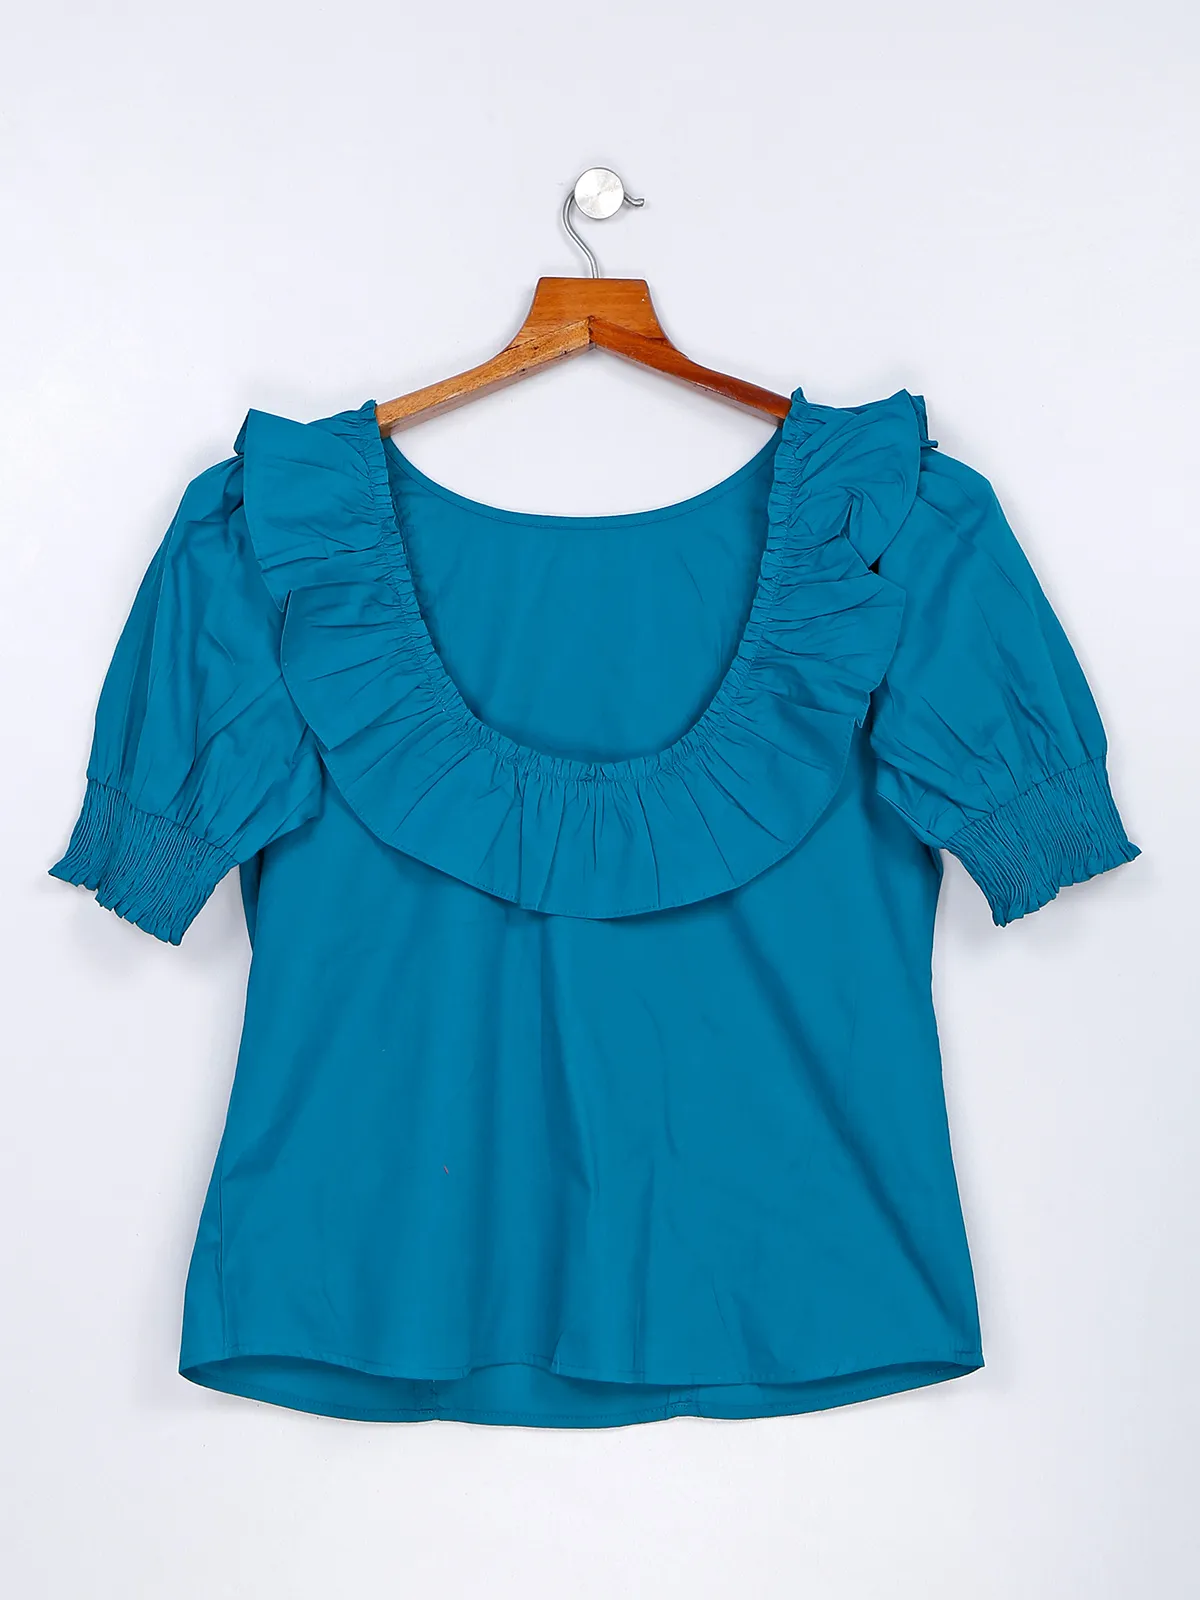 Trendy rama blue cotton top